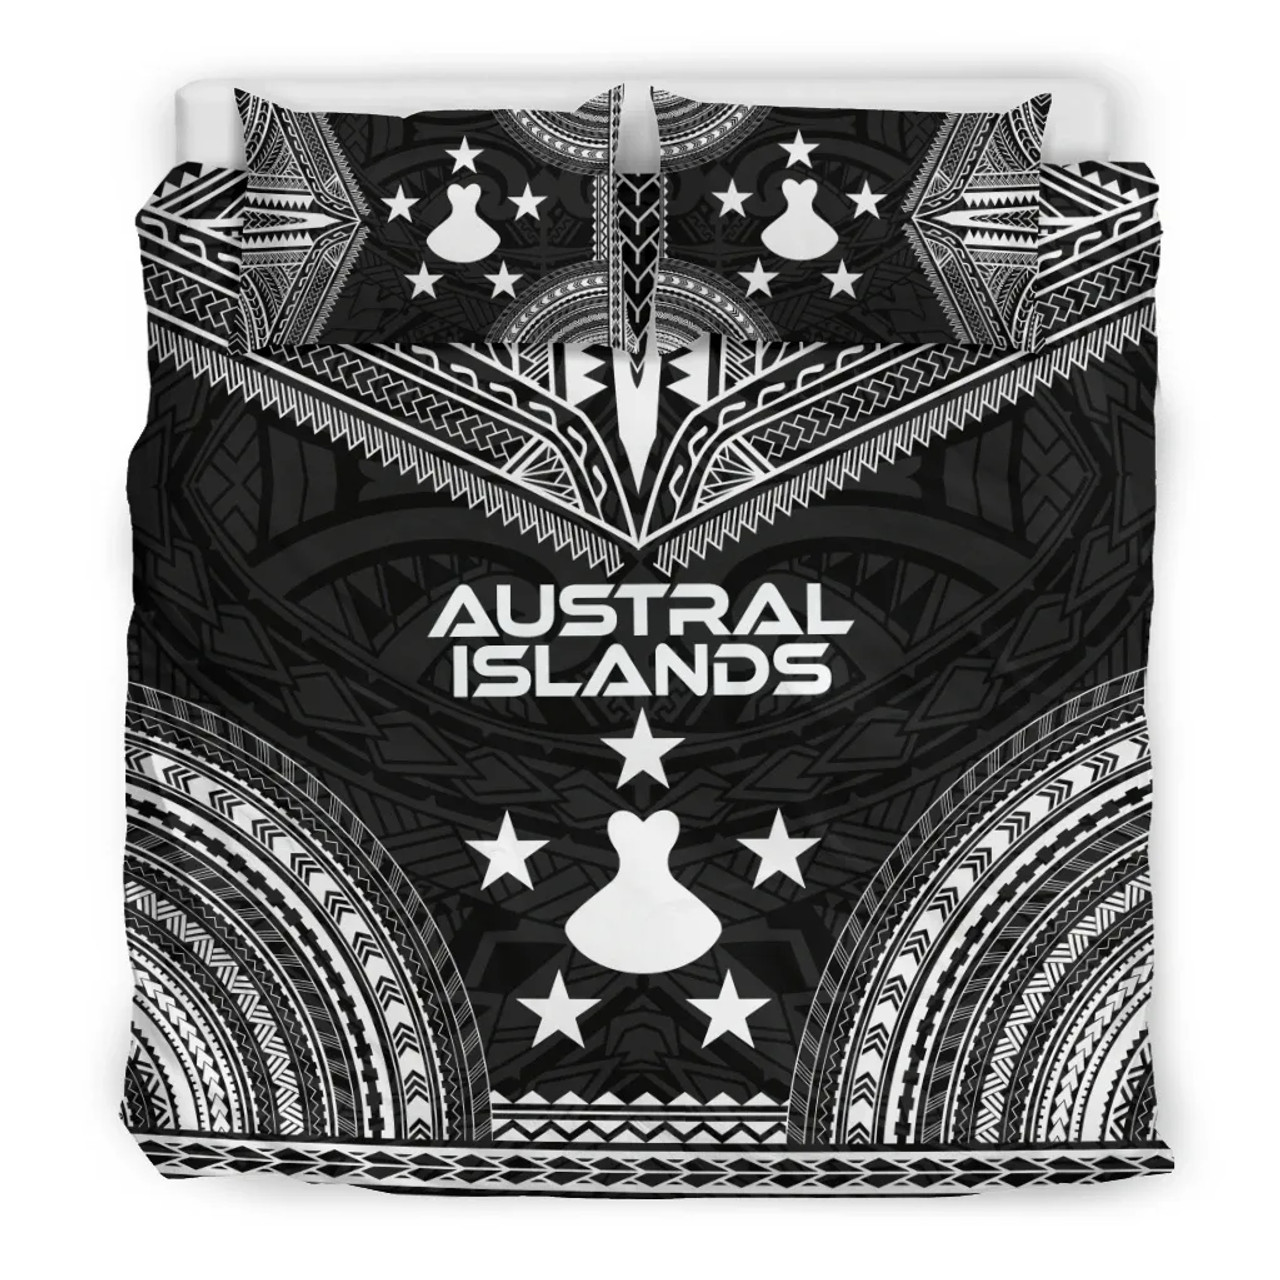 Austral Islands Polynesian Chief Duvet Cover Set - Black Version 3